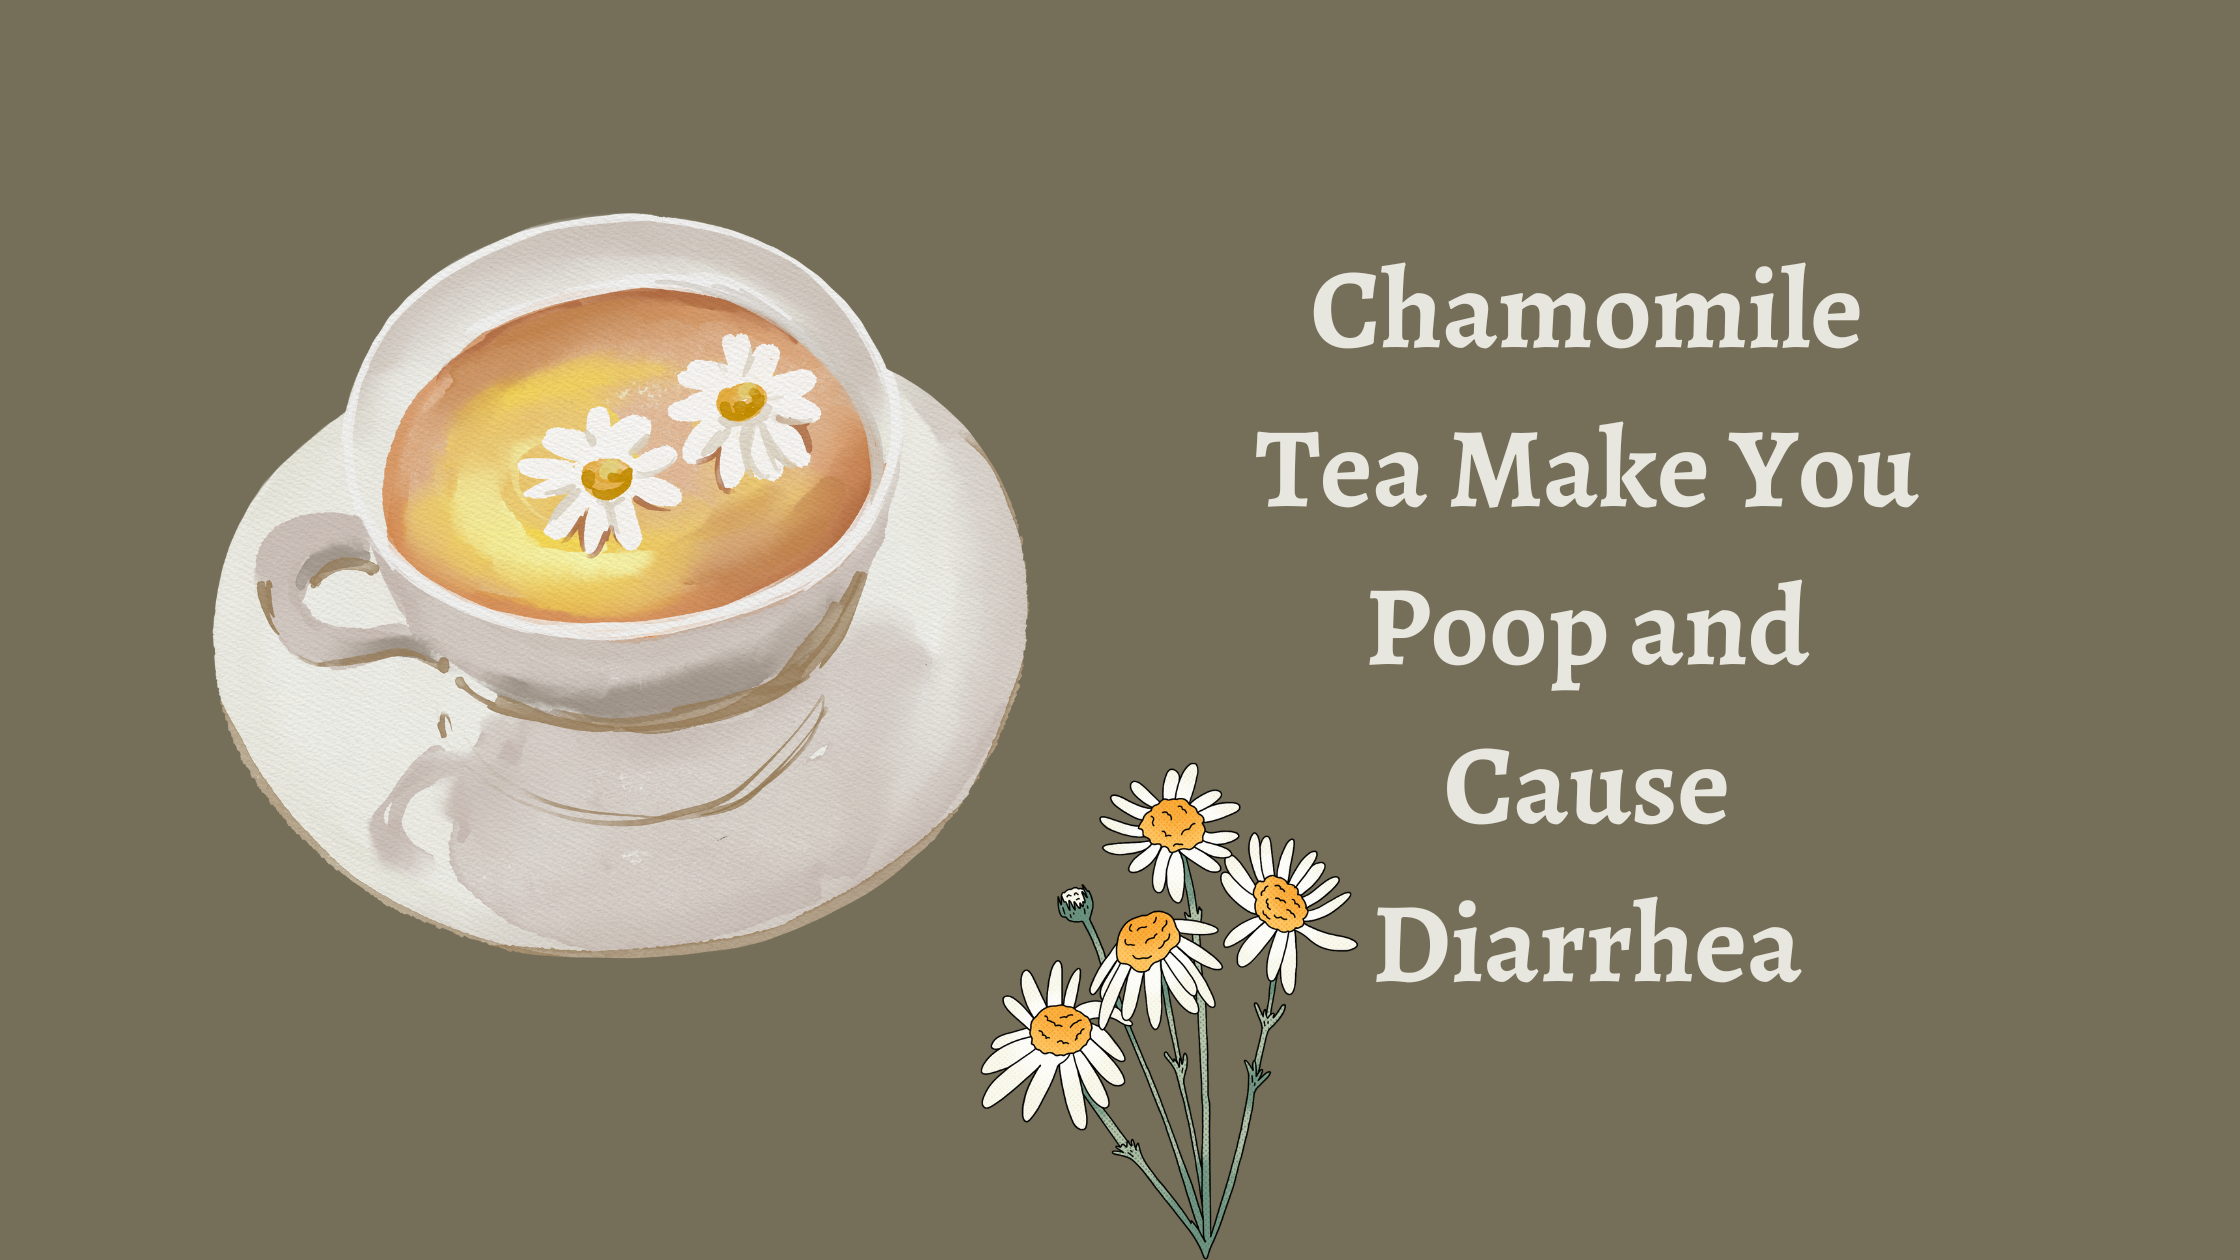 can chamomile tea cause diarrhea